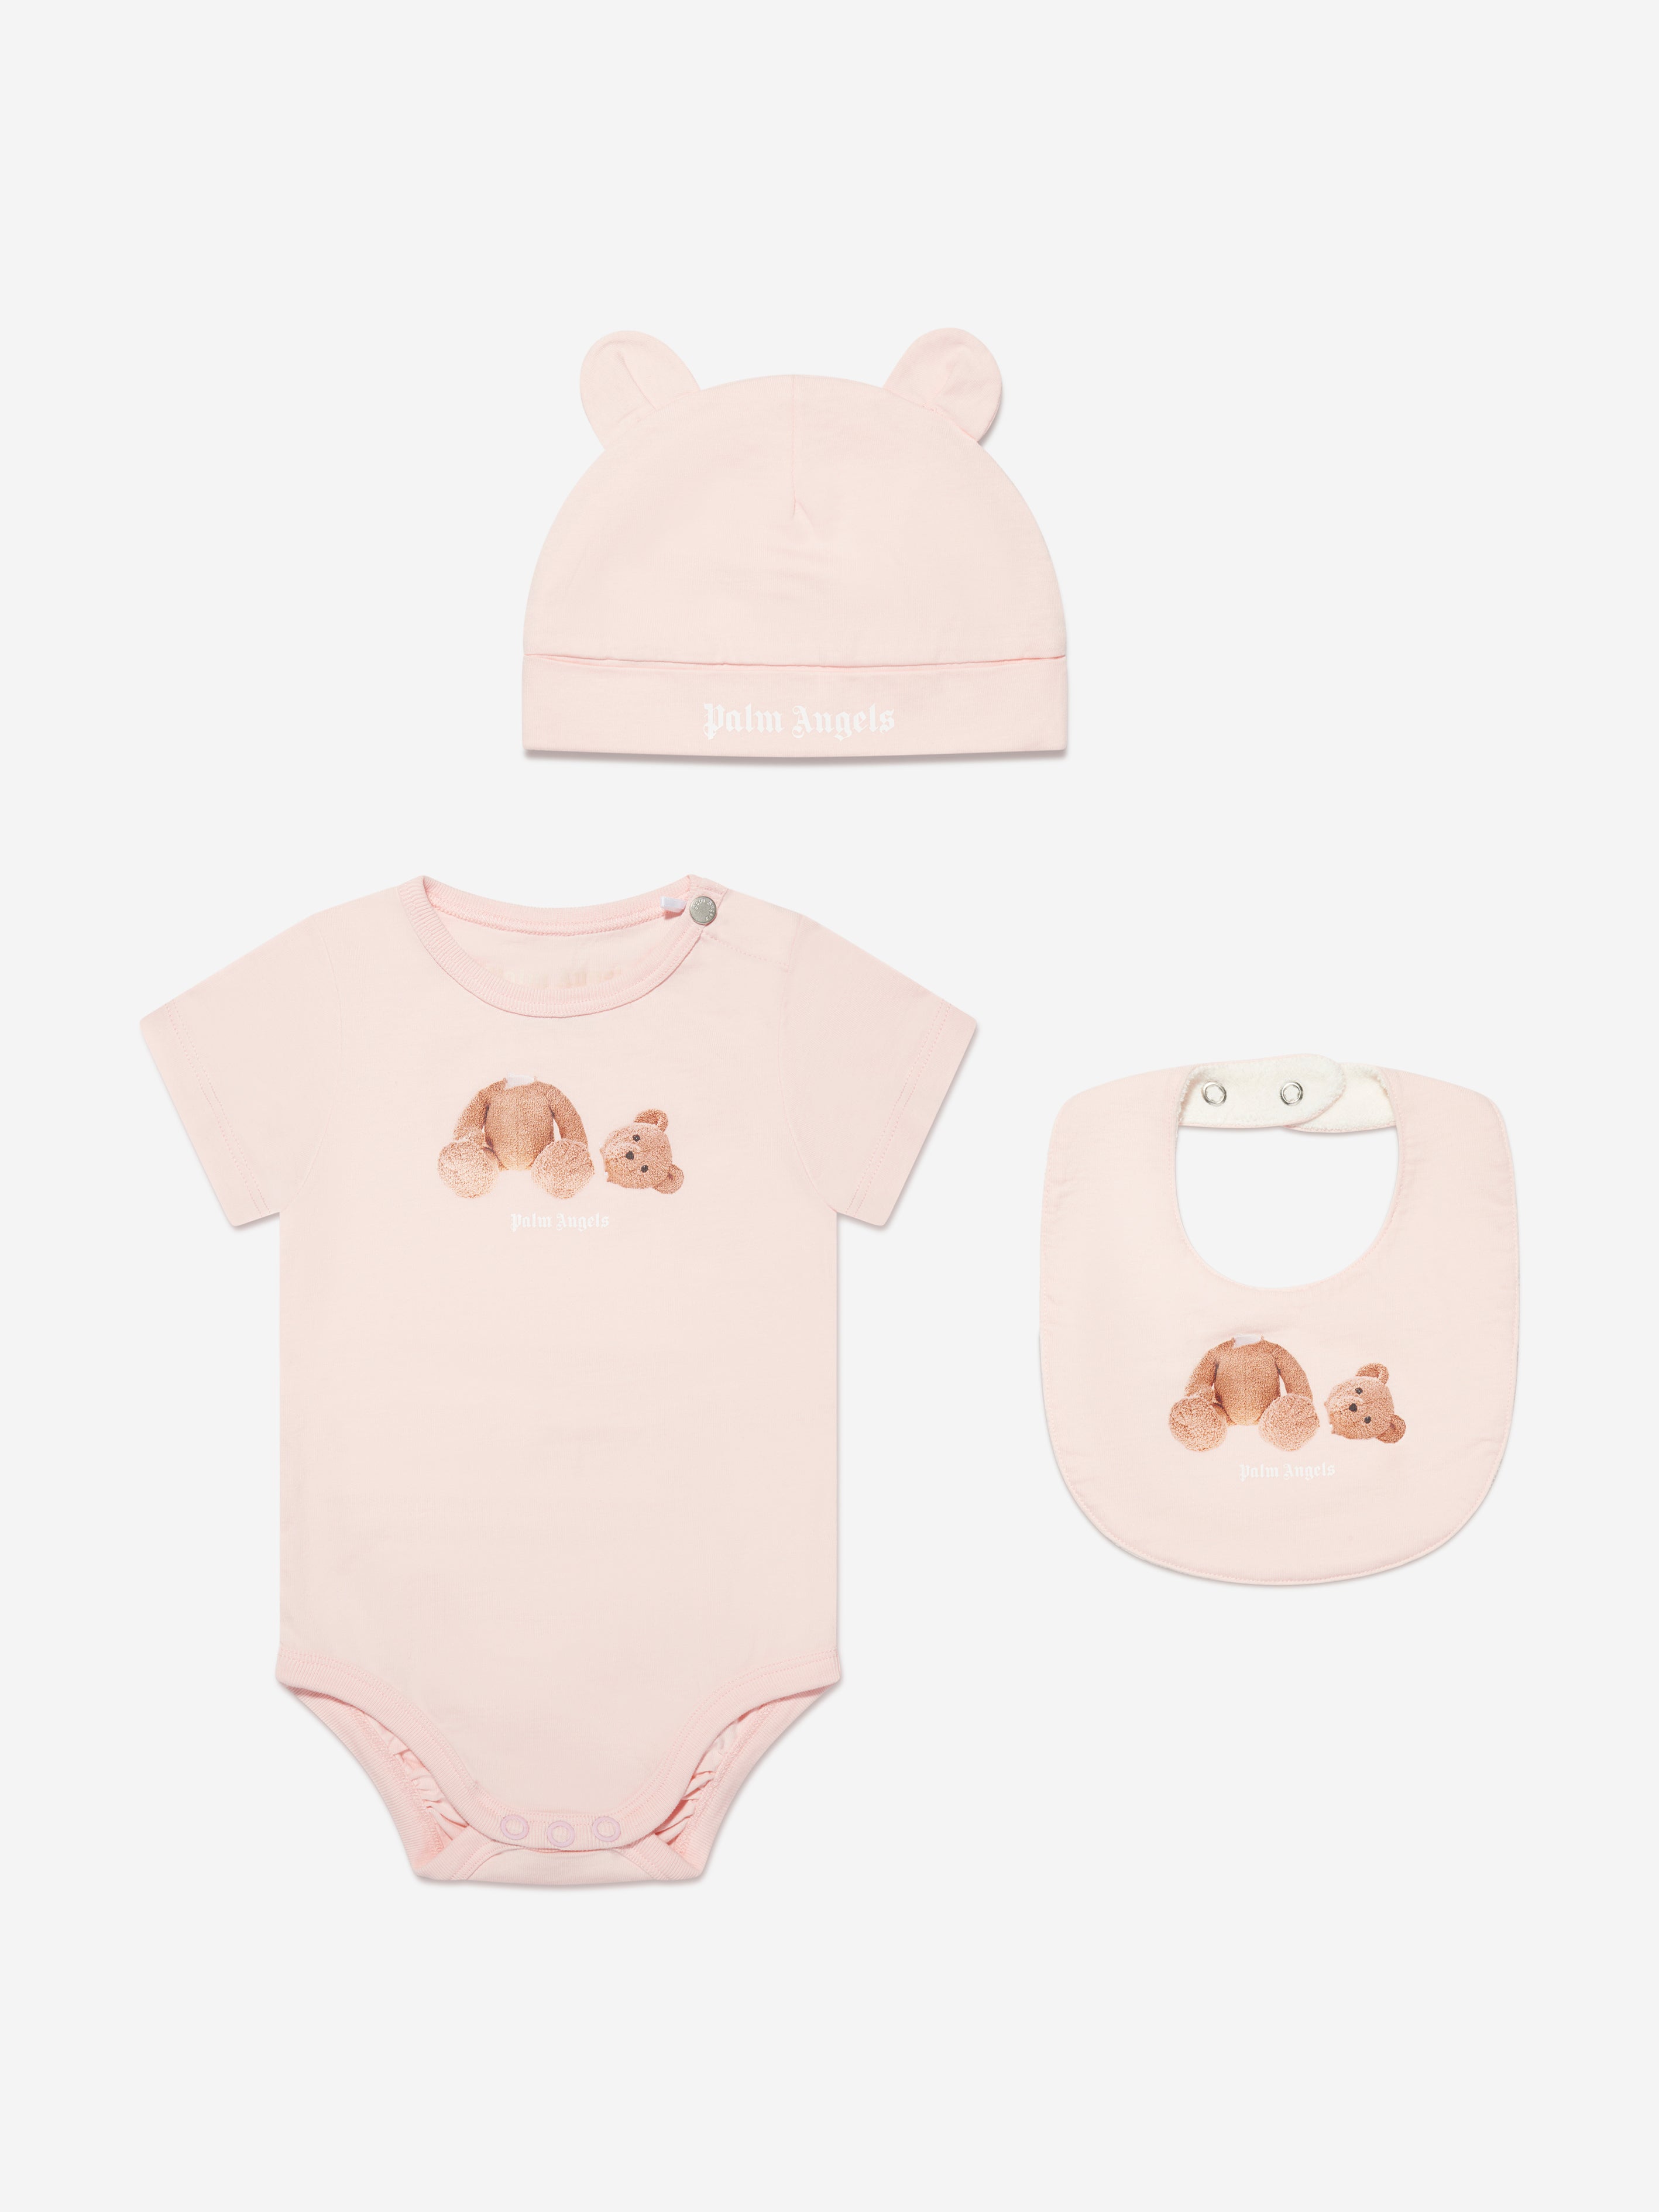 Palm Angels Baby Girls Bodysuit Gift Set in Pink | Childsplay Clothing